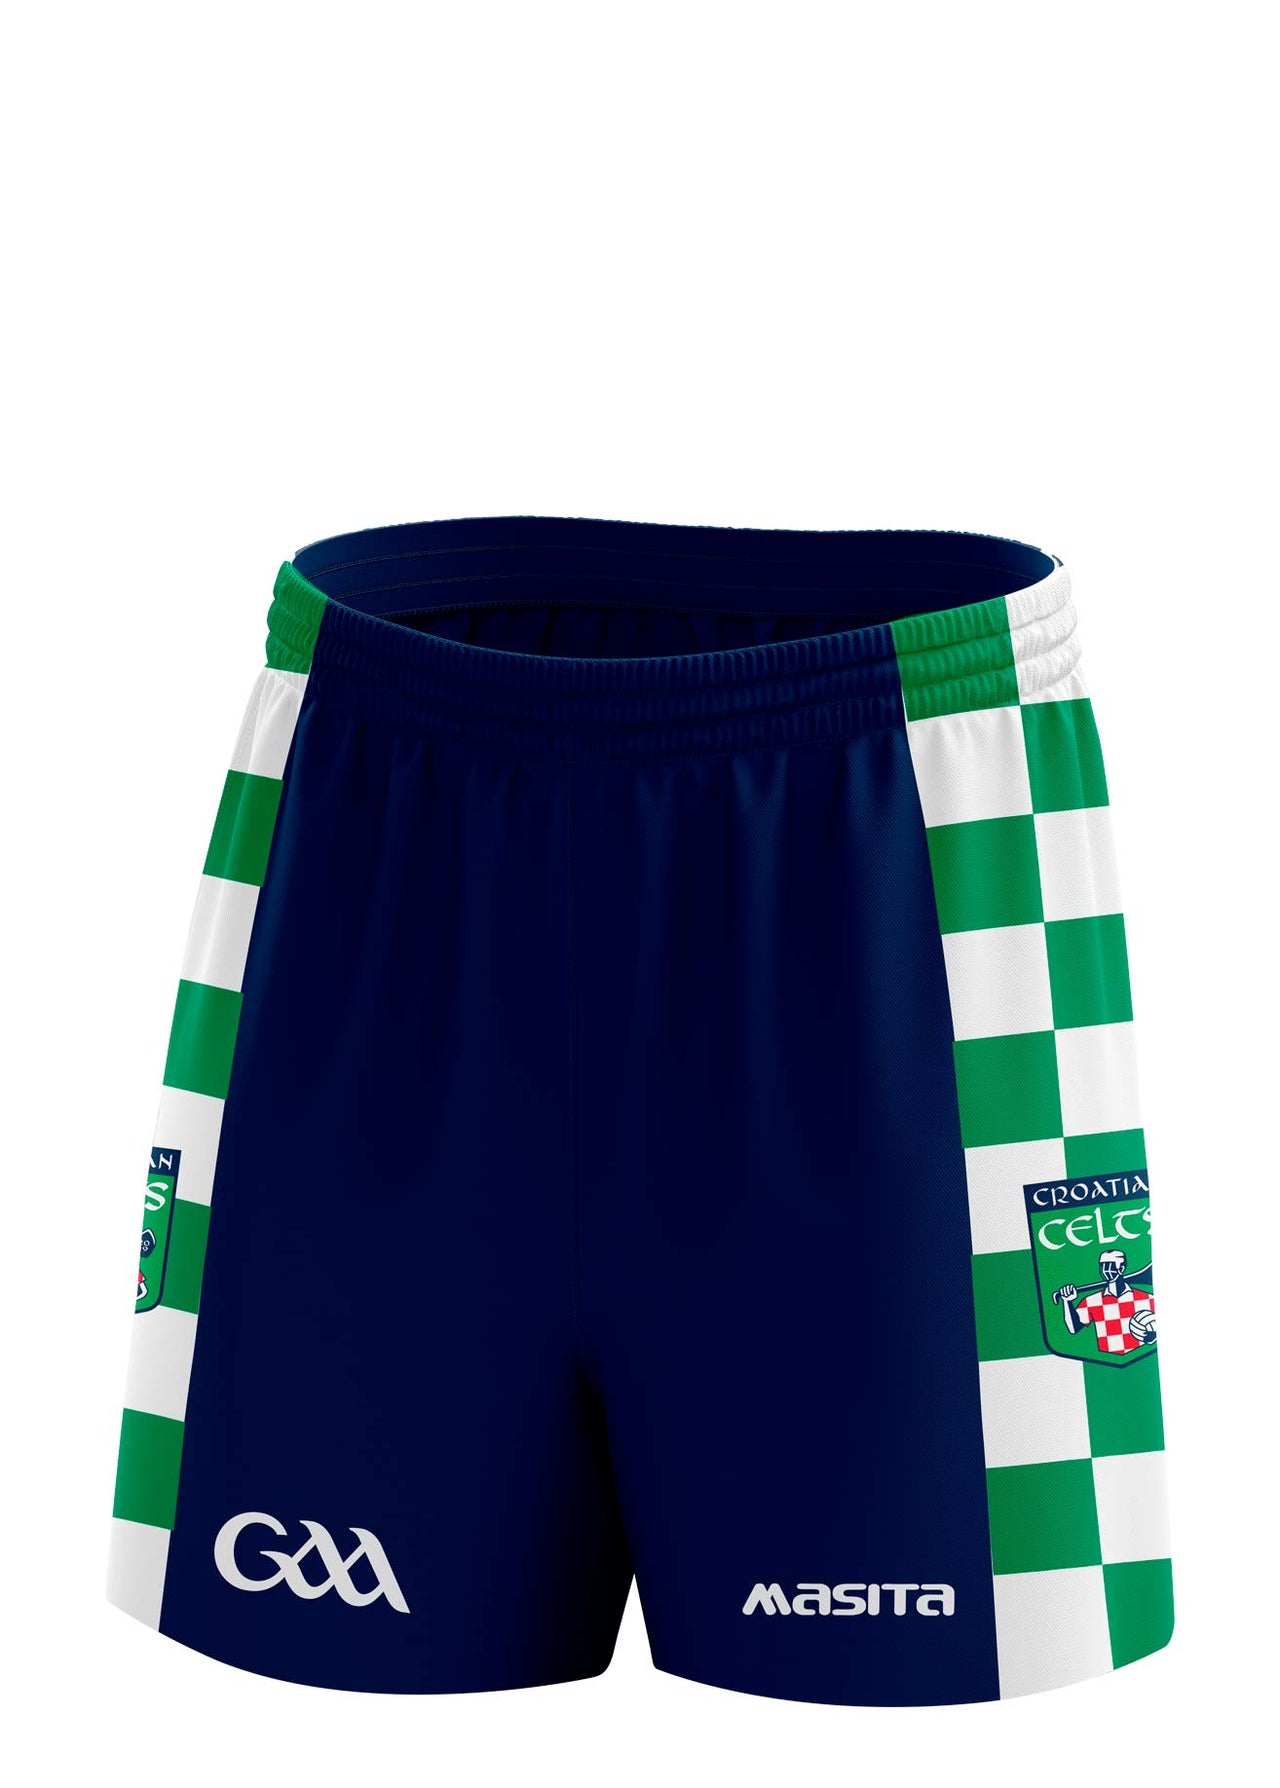 Croatian Celts Match Shorts Adult